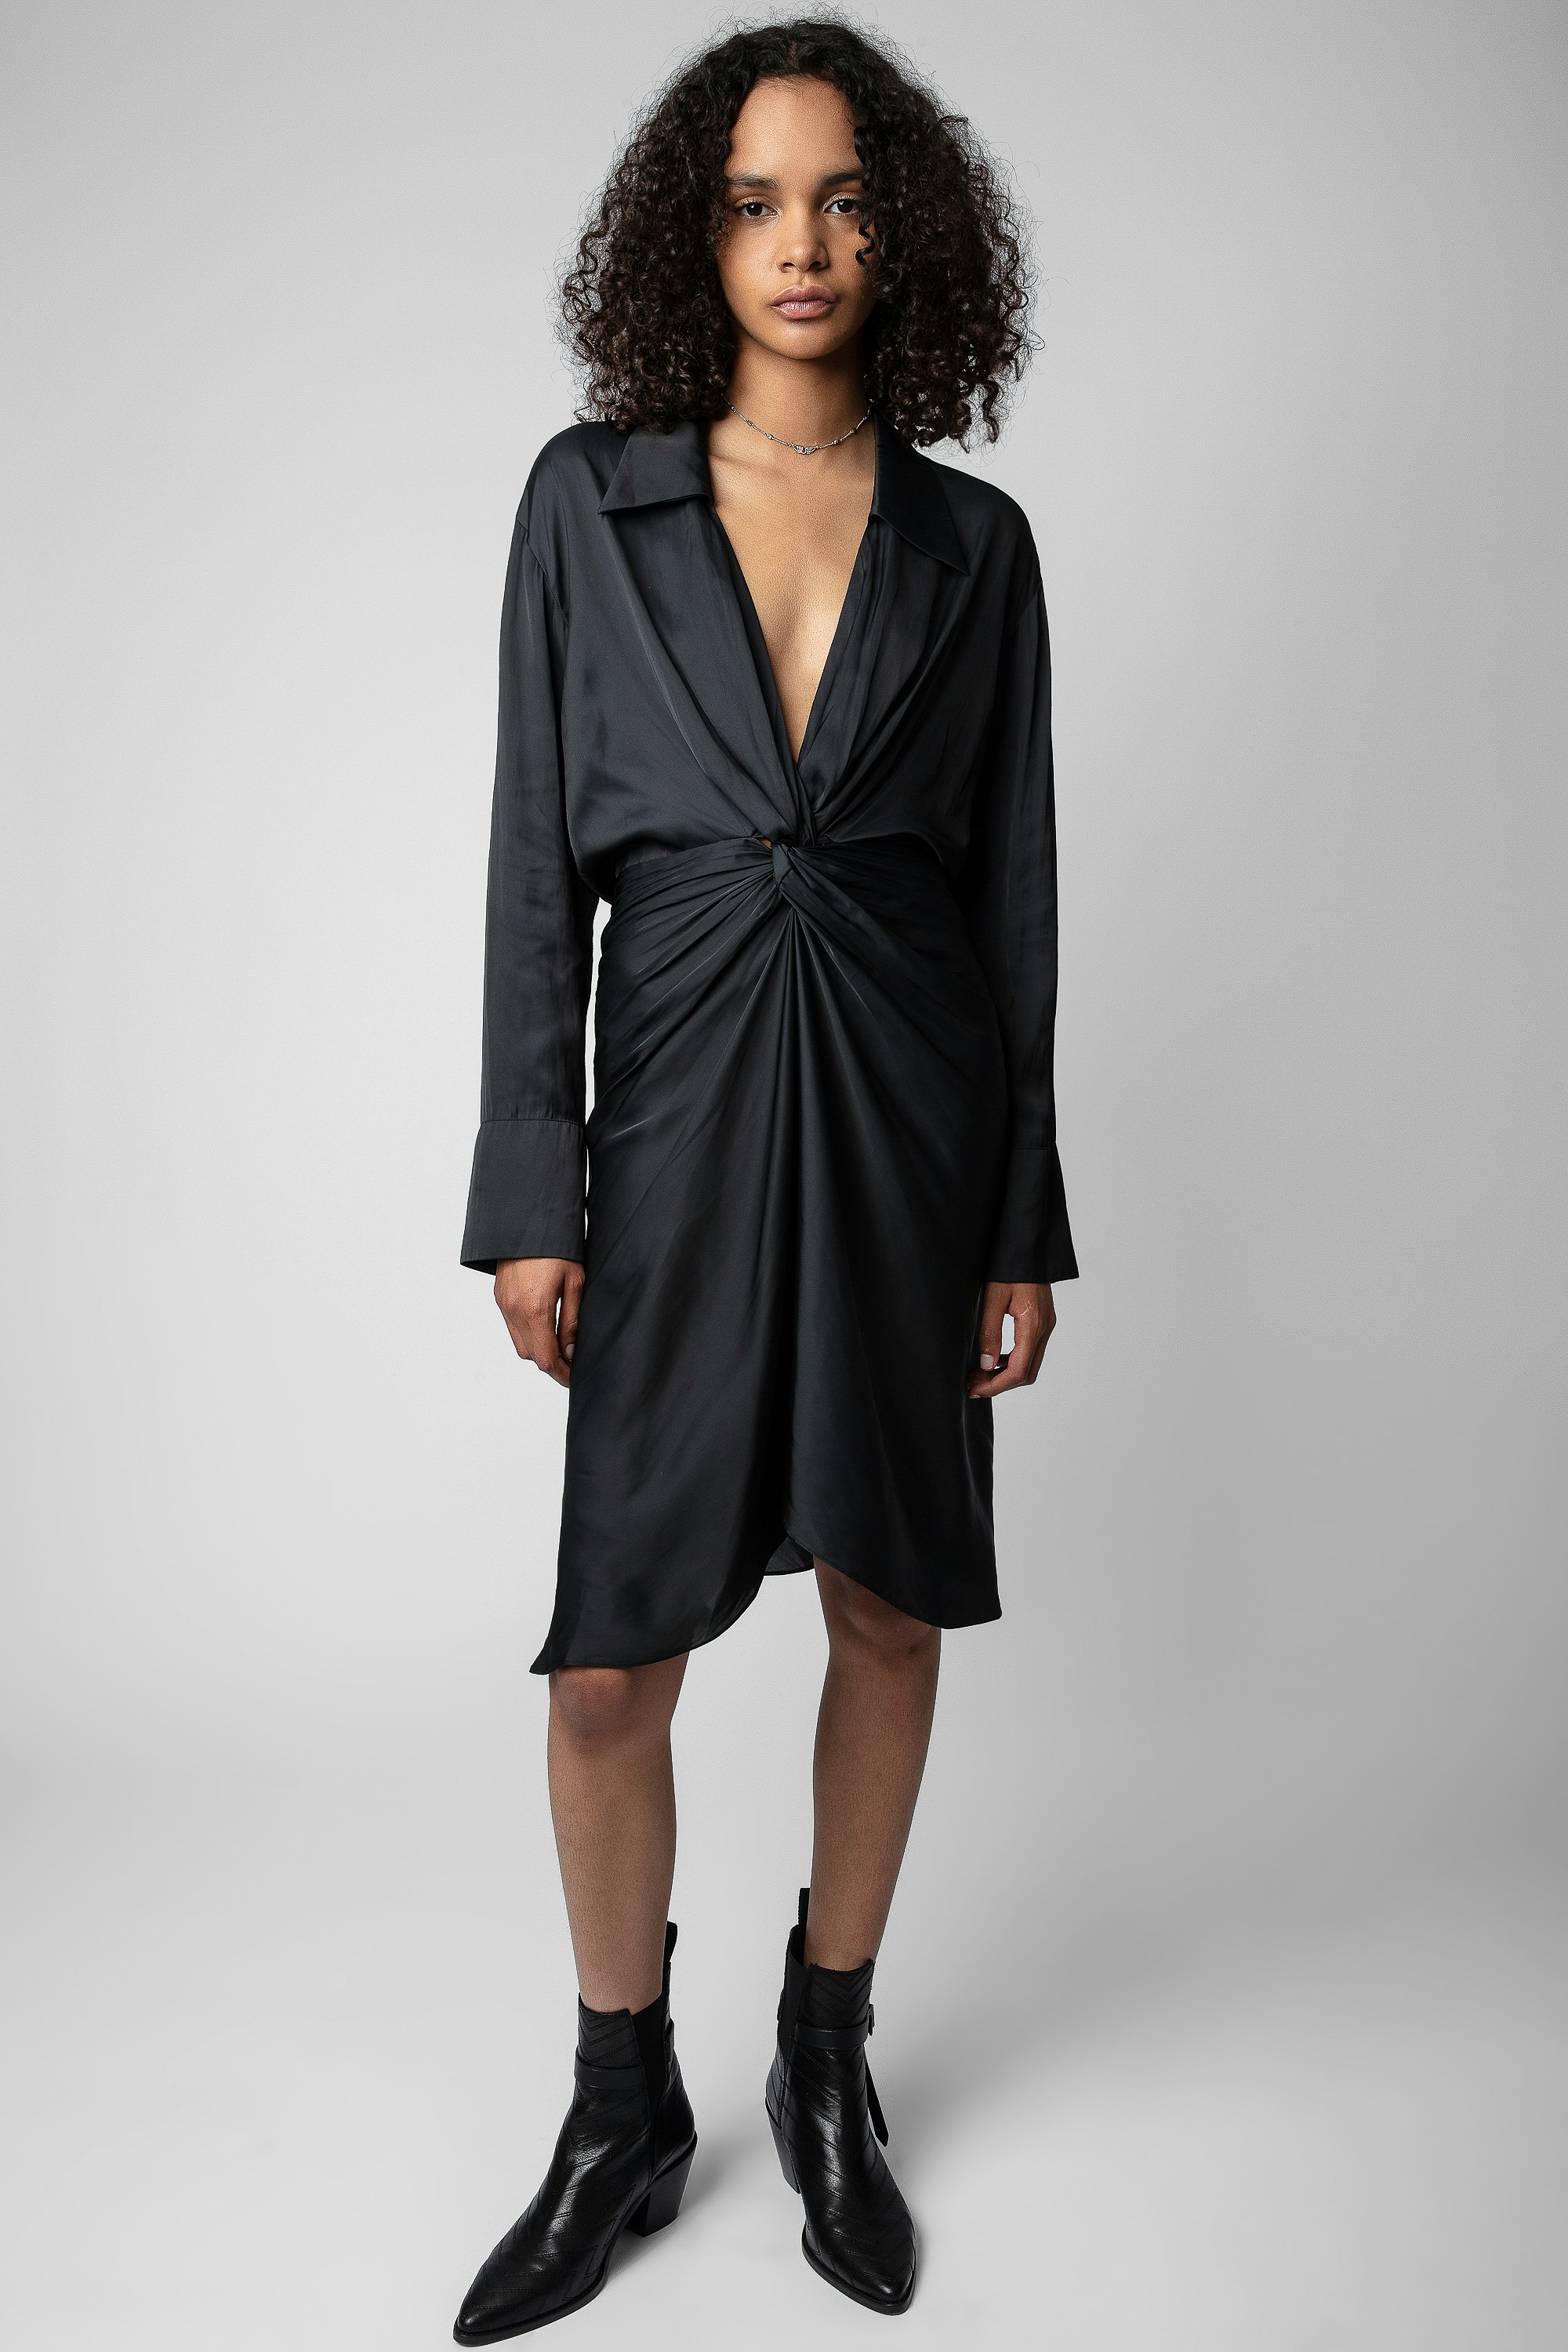 Rozo Satin Dress - Women's knotted and draped black satiny short dress.